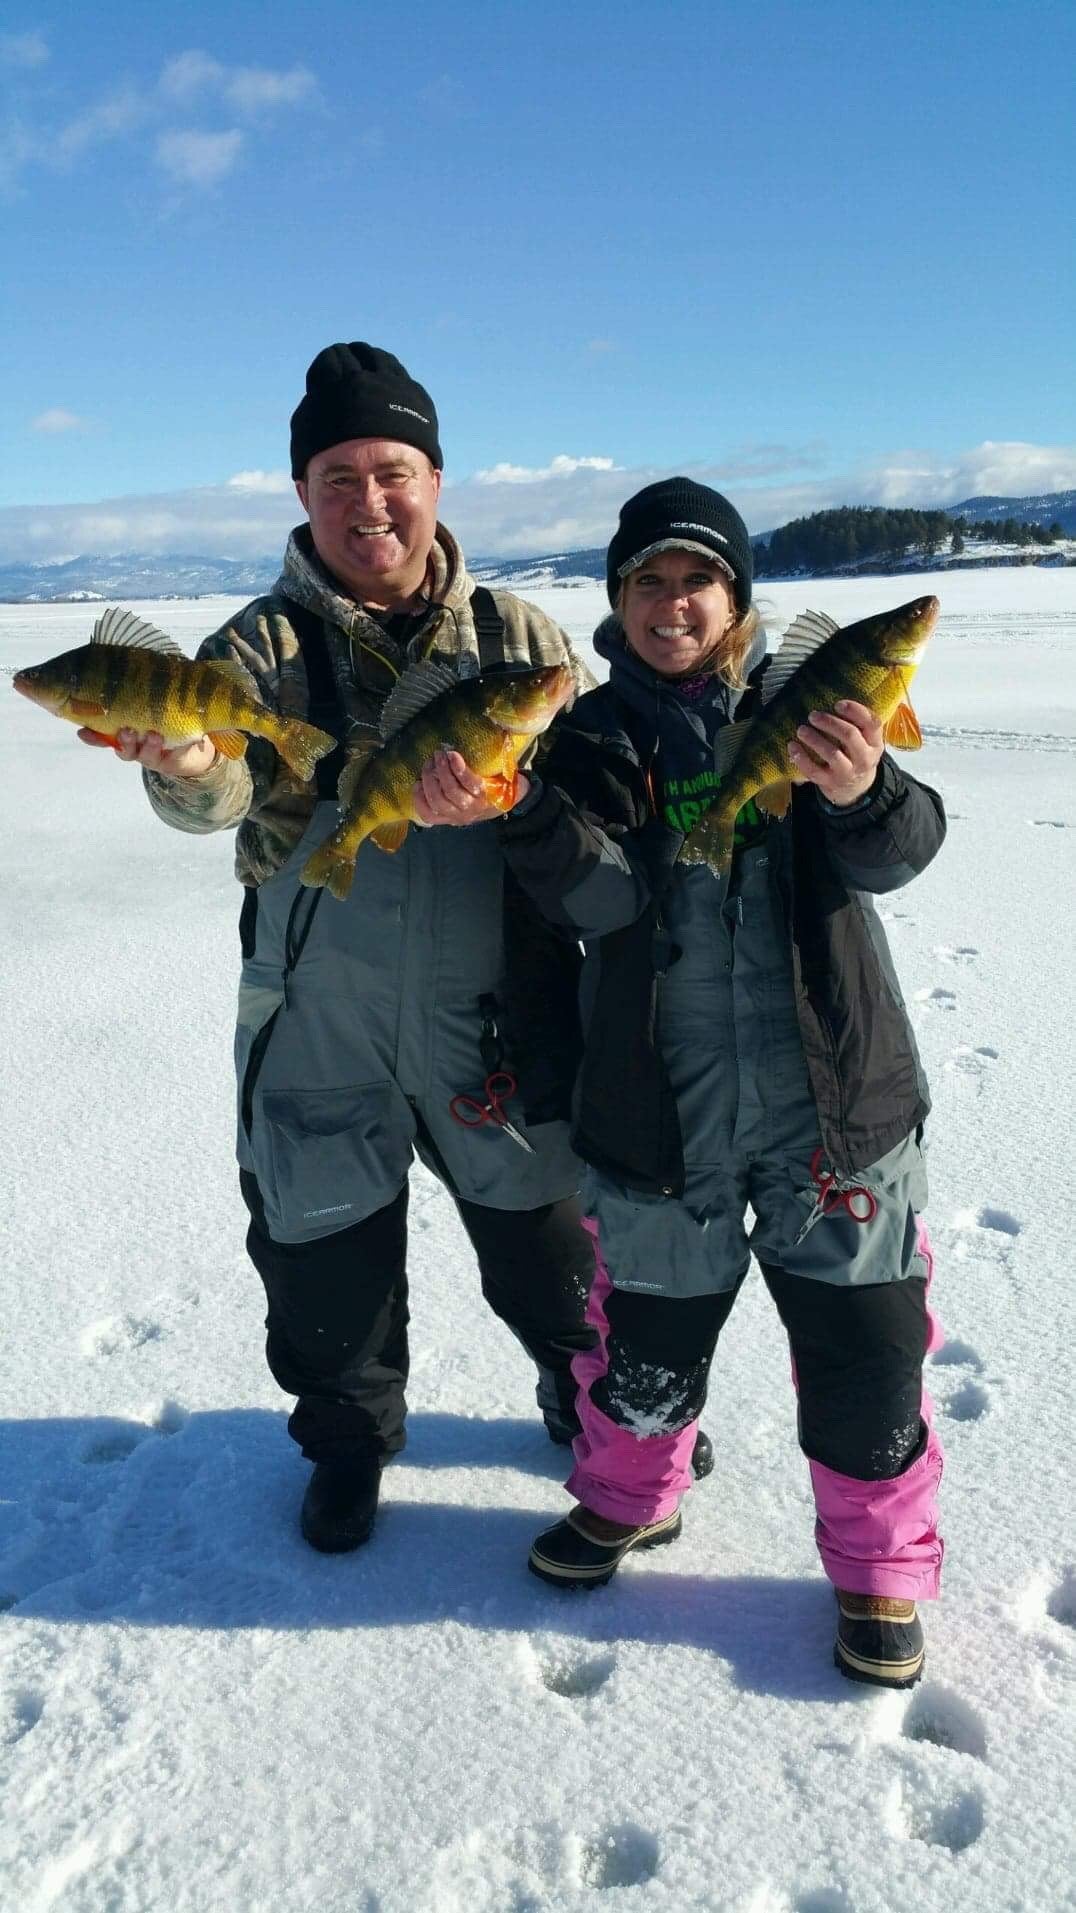 Work Sharp Pro Staffers Bobby and Robin Shindelar – The Ice Fishing Experts!